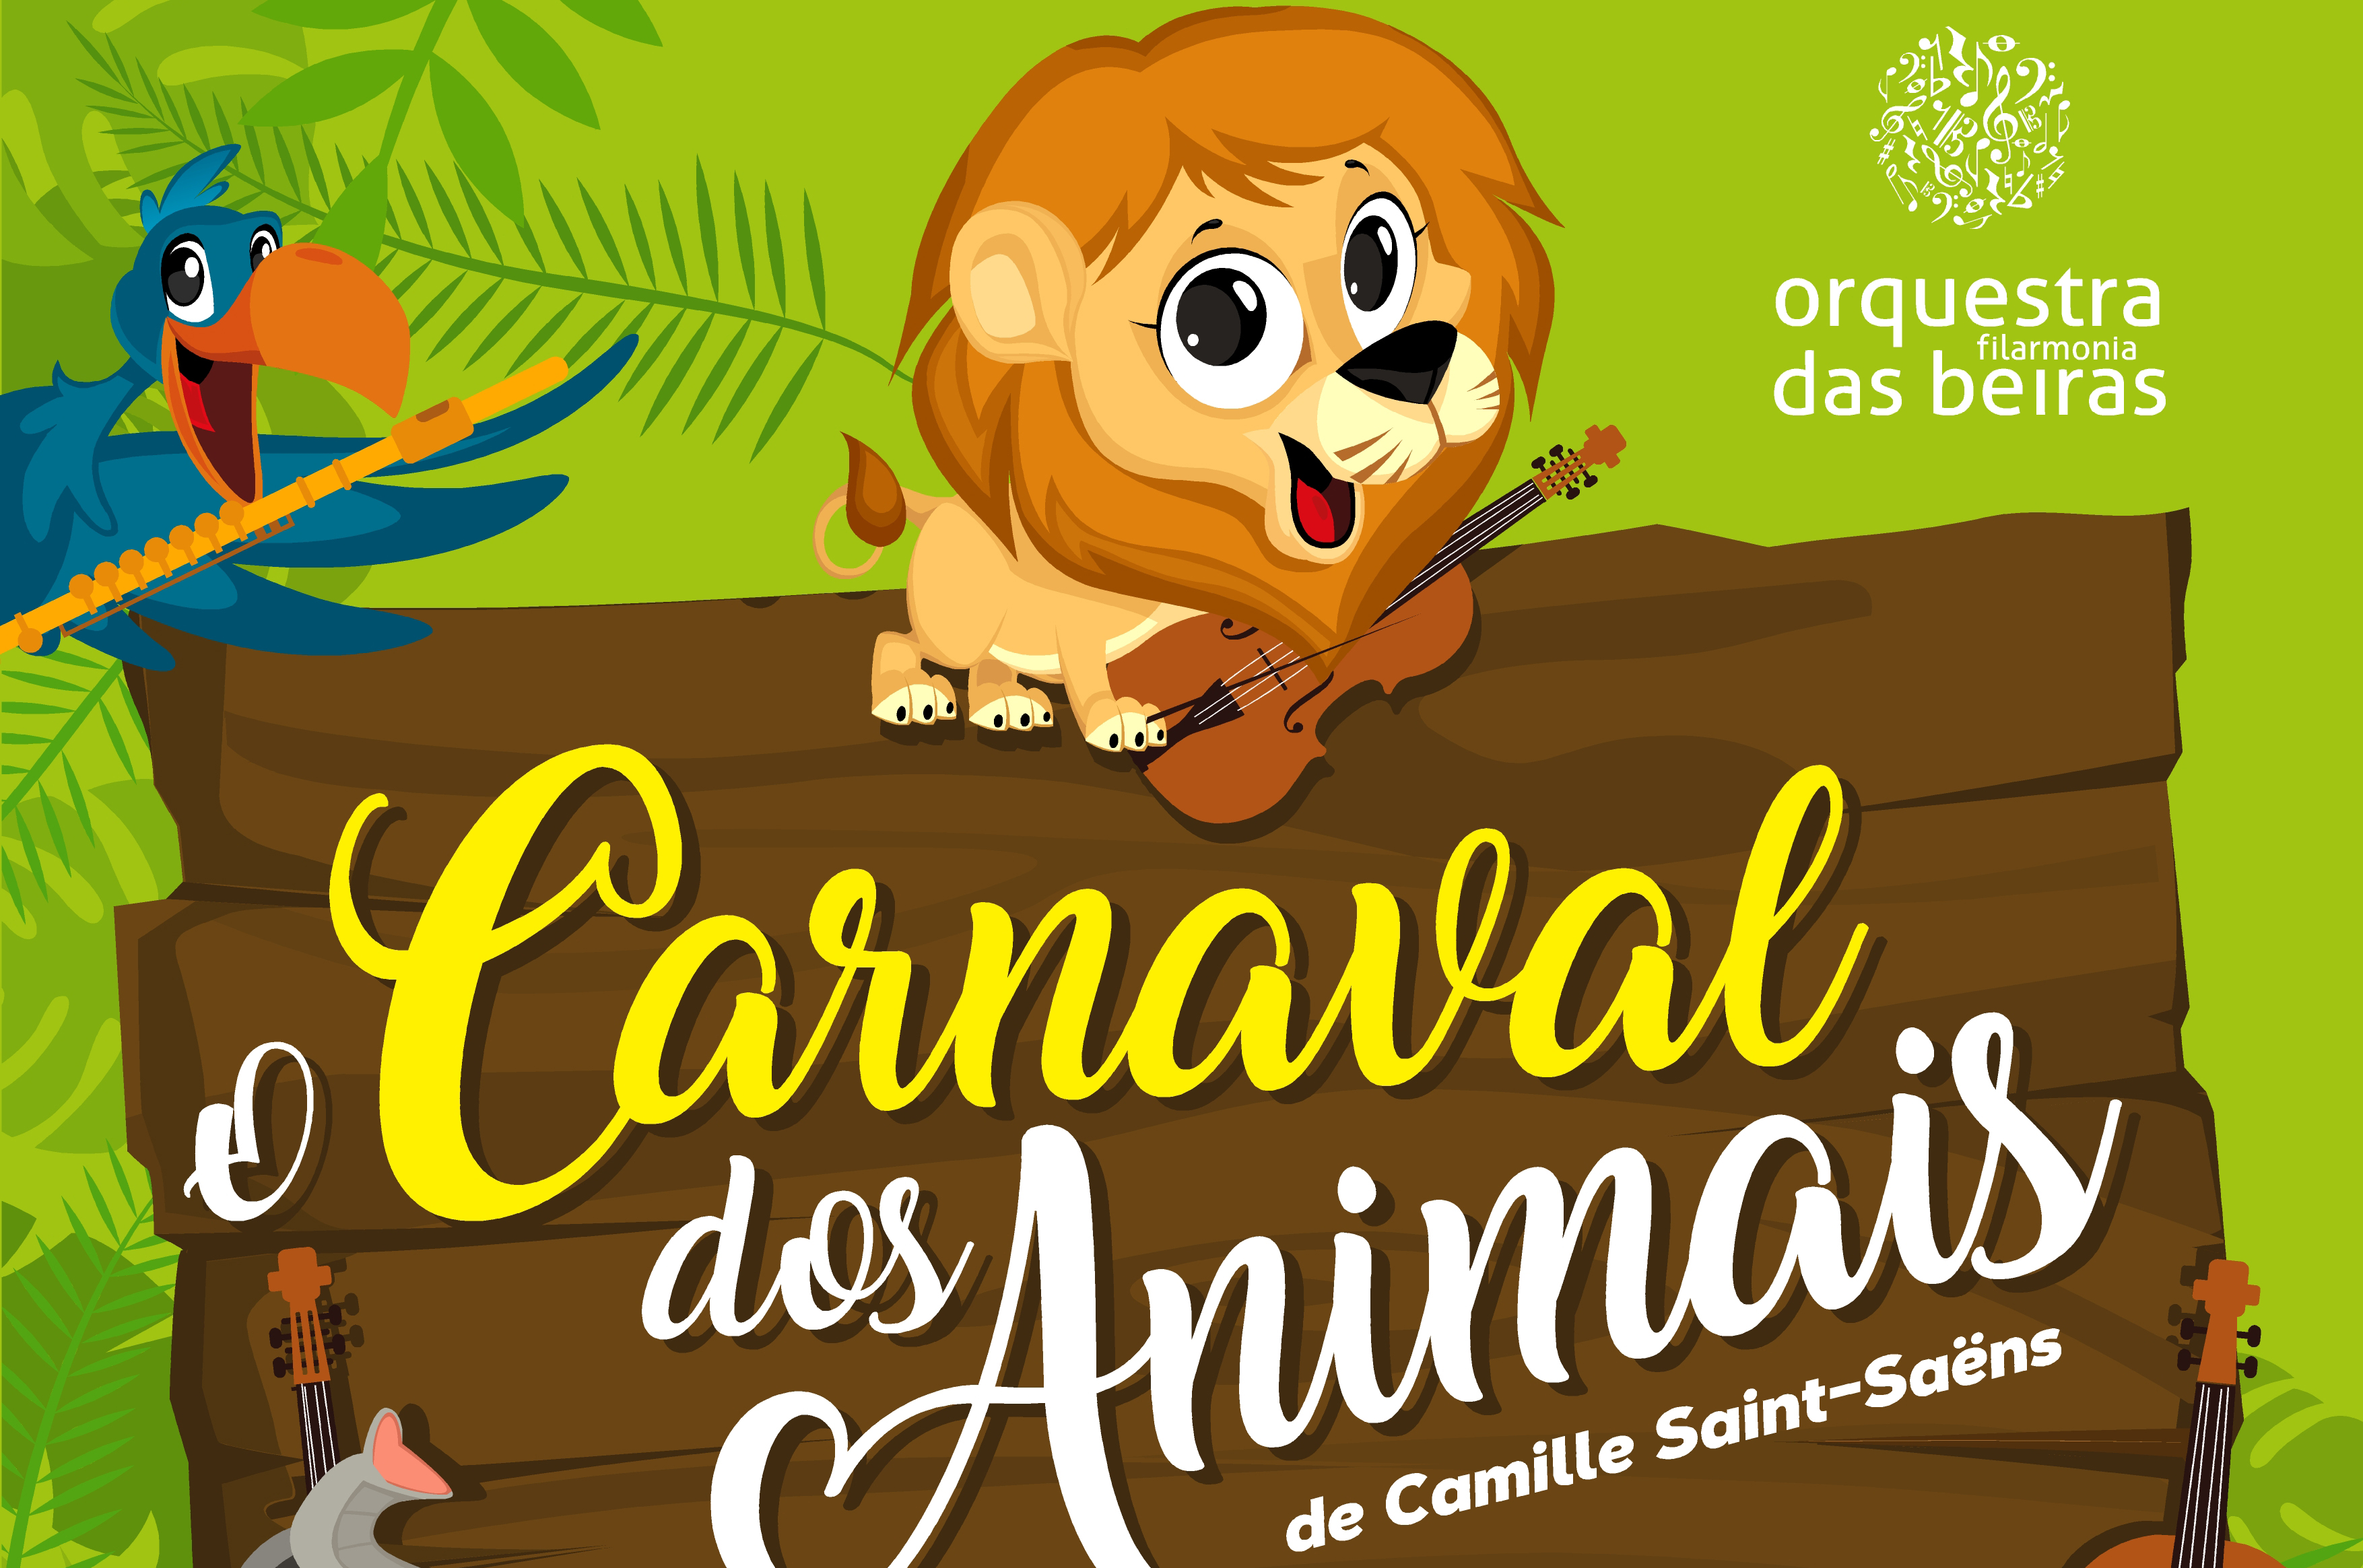 Camille Saint-Saëns além do Carnaval dos animais